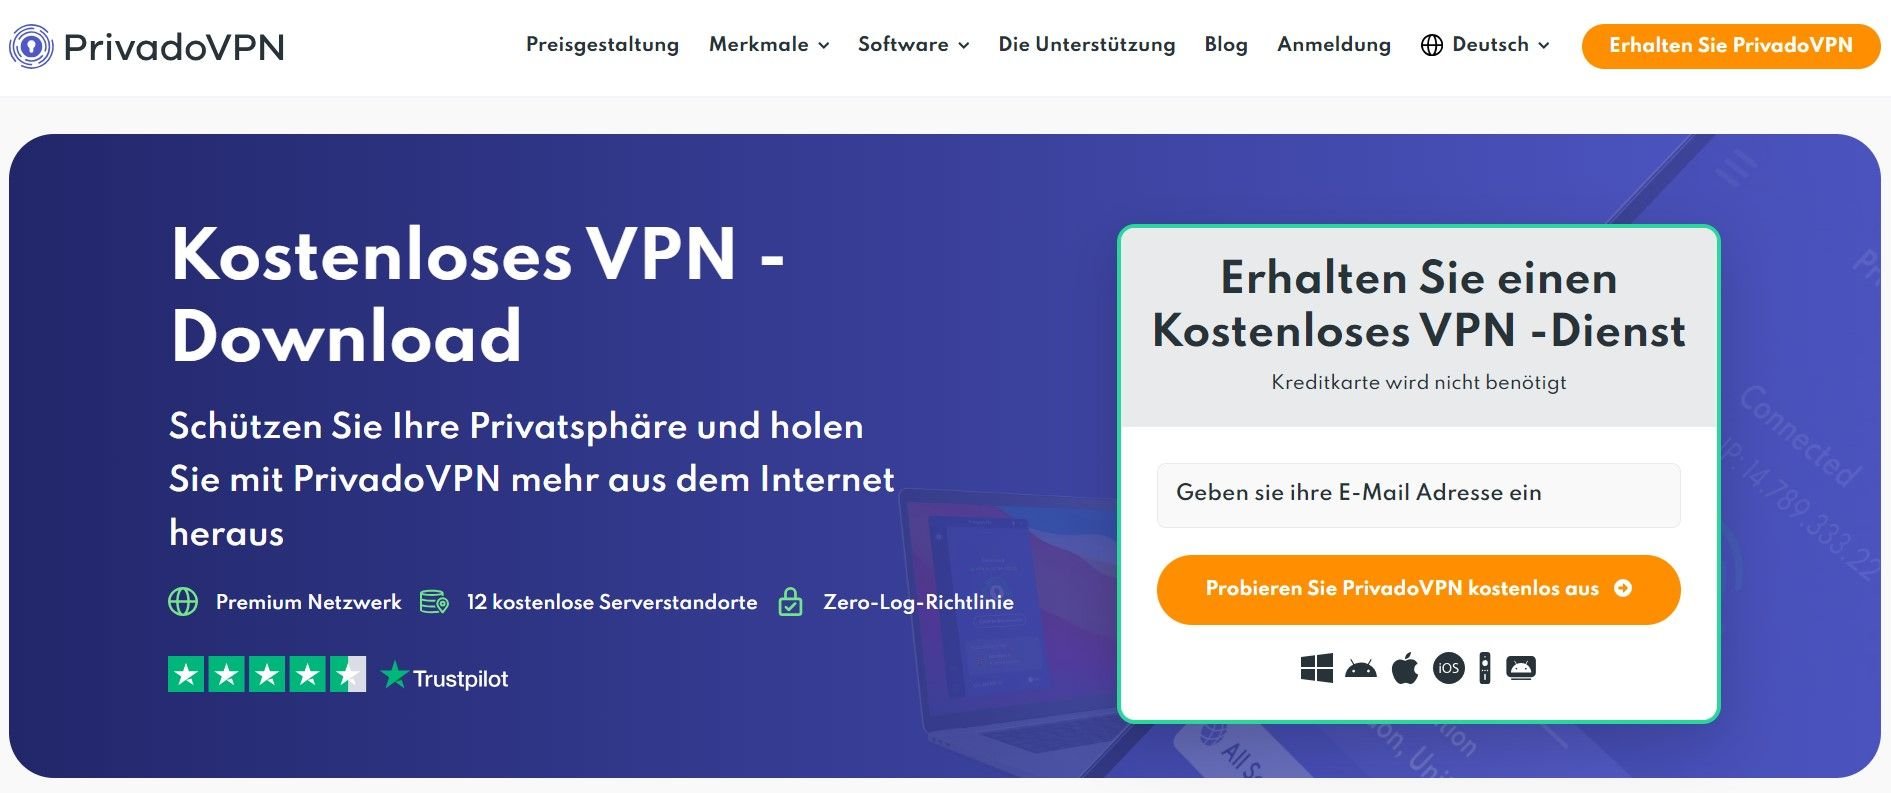 PrivadoVPN bestes kostenloses VPN USA gratis